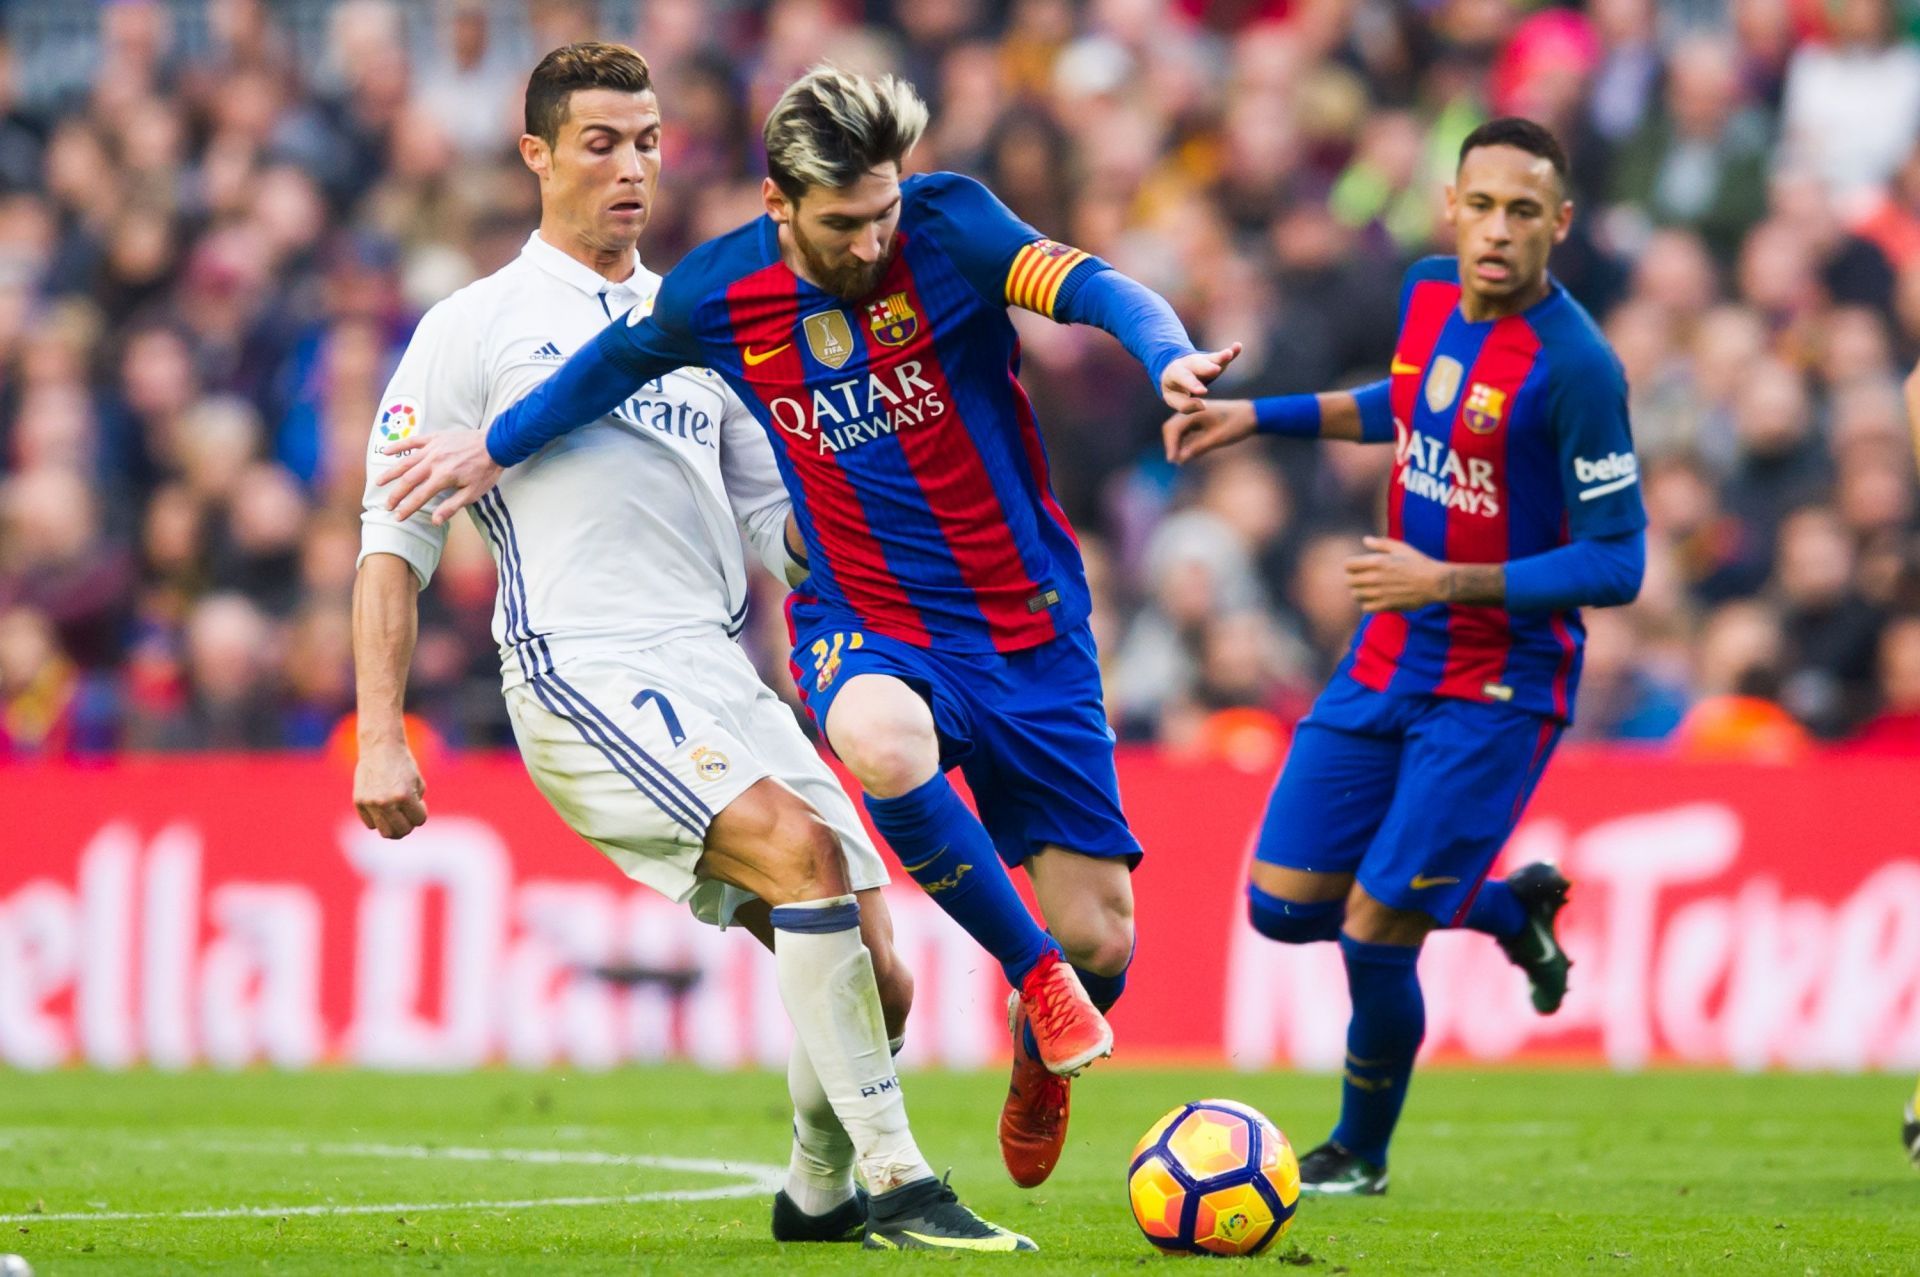 Messi and Ronaldo in action during El Clasico